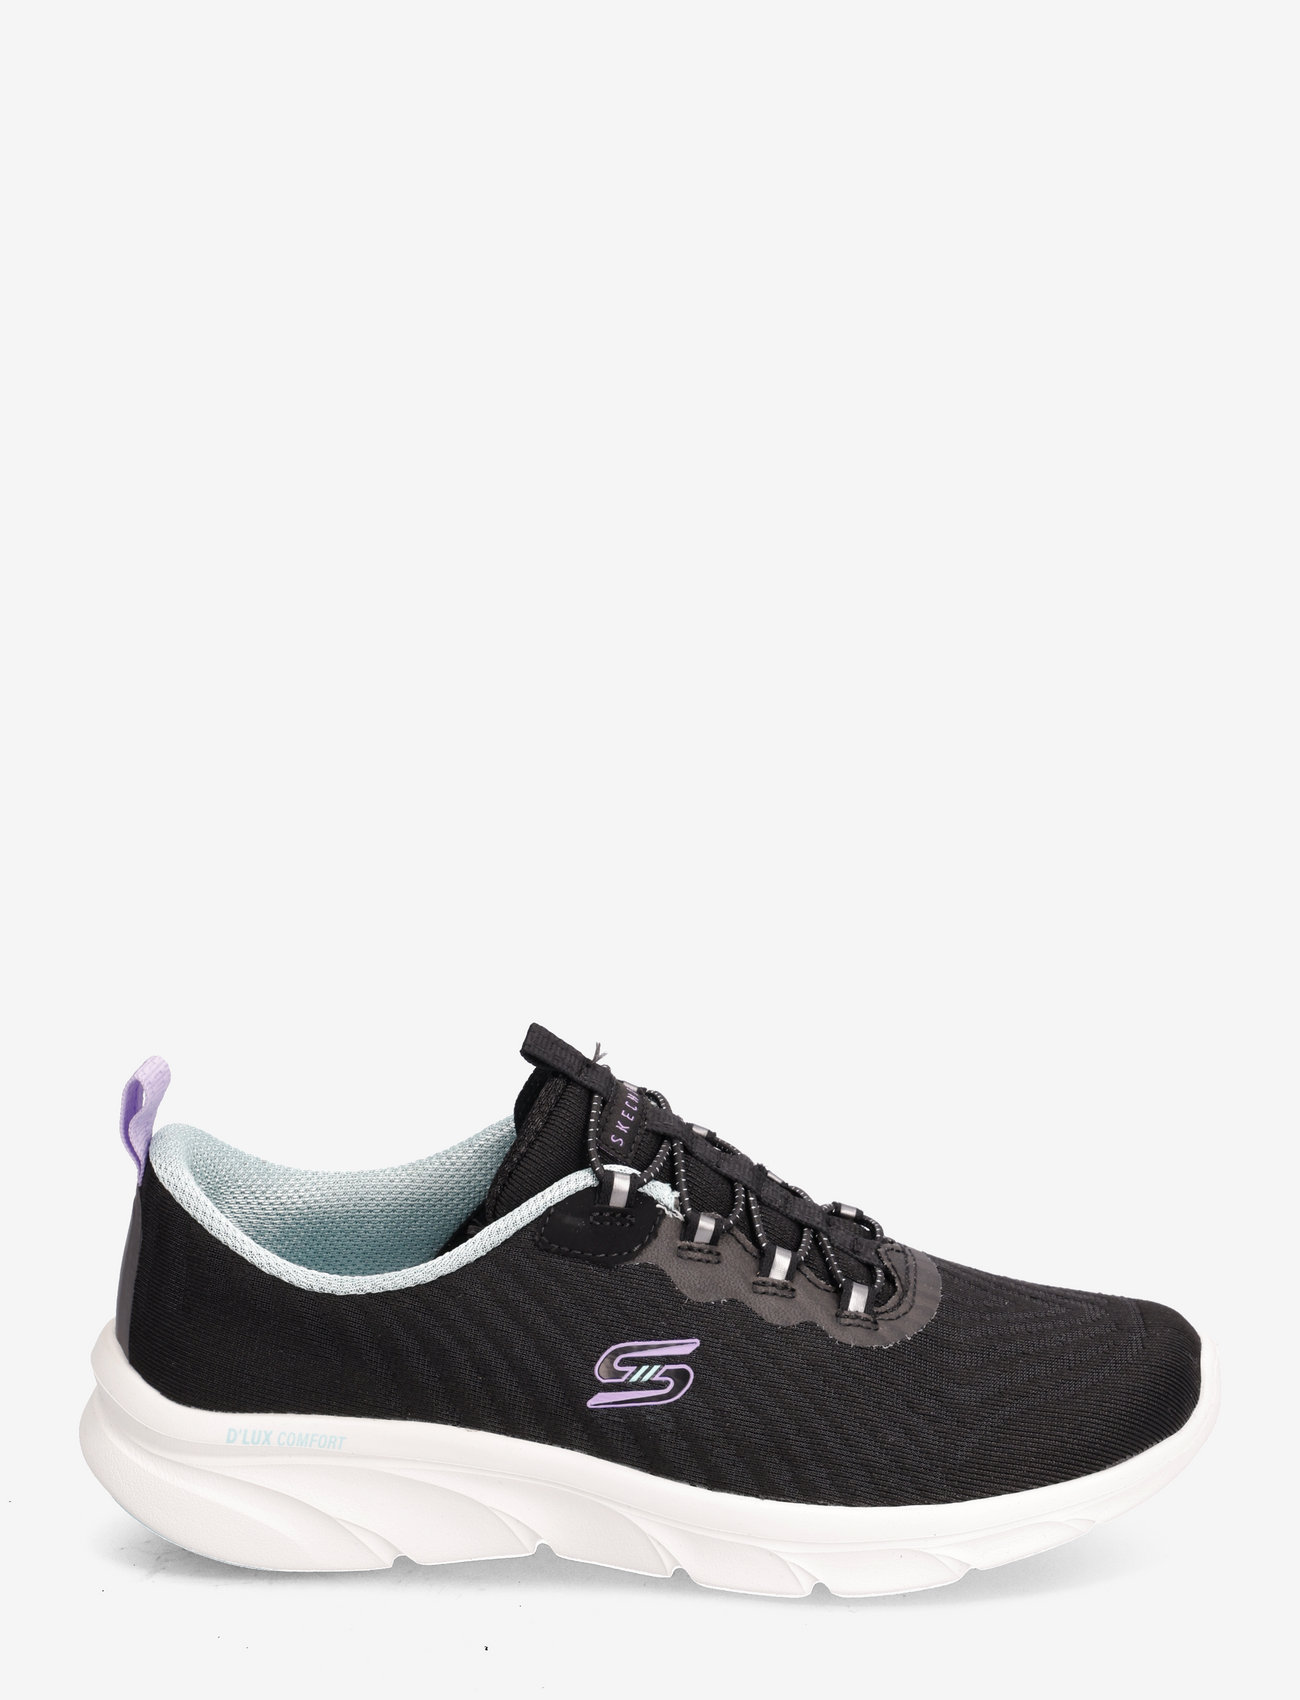 Skechers - Womens D'Lux Comfort - Easy Street - lave sneakers - bkw black white - 1